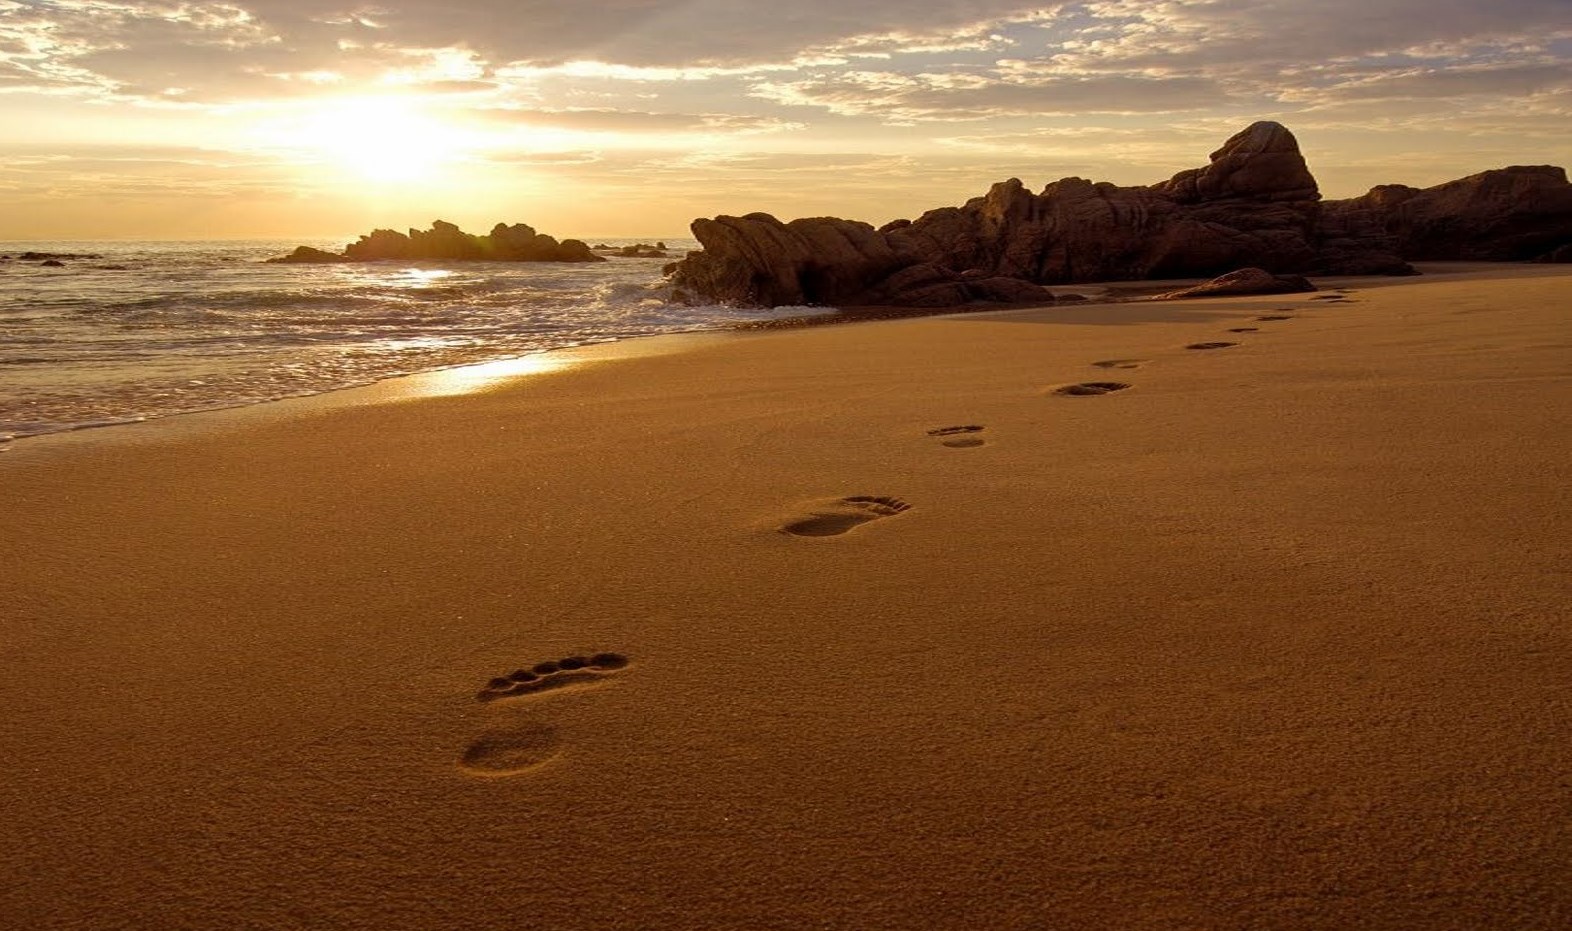 footprints1